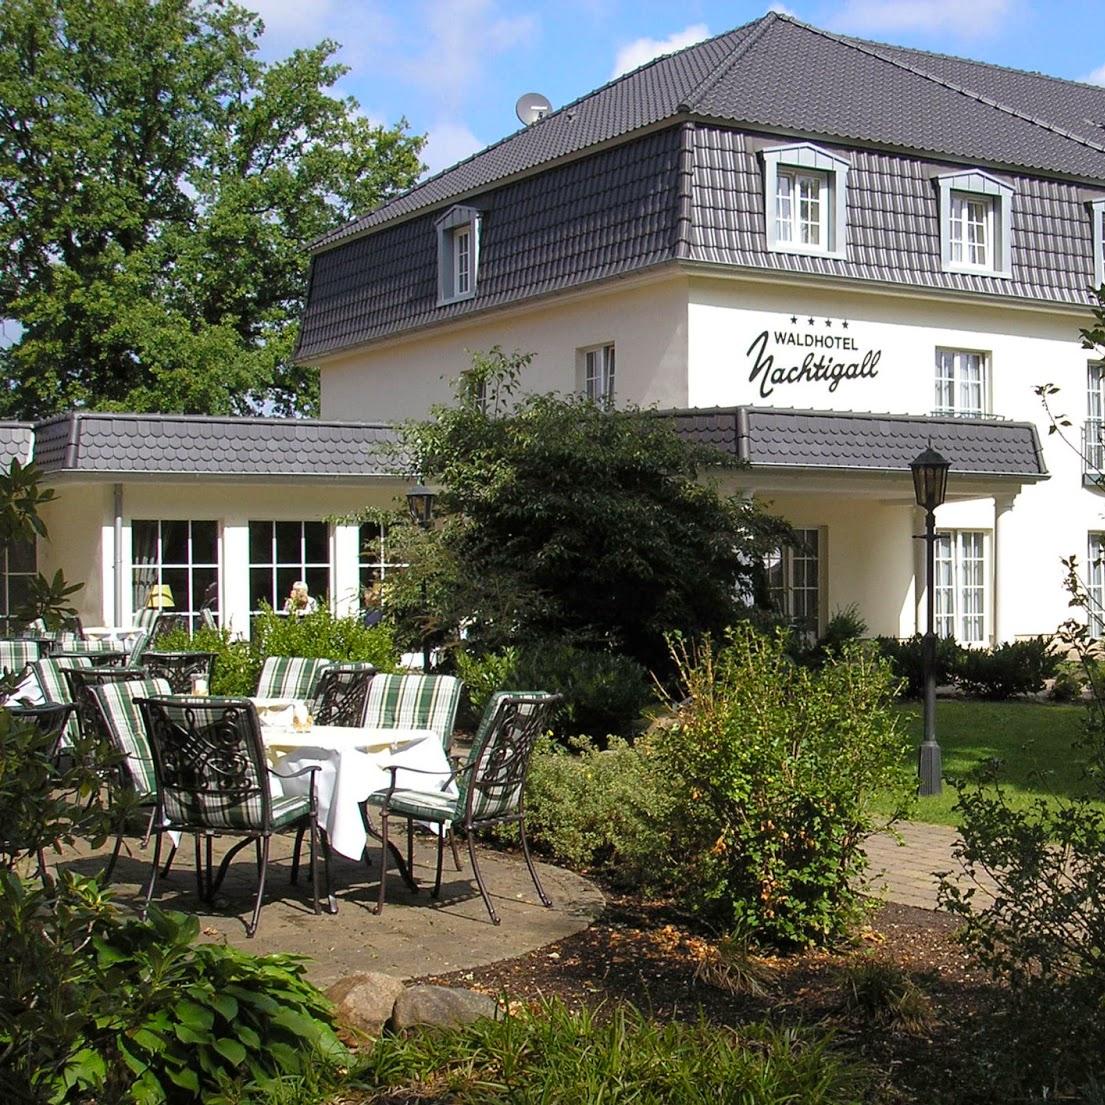 Restaurant "Waldhotel Nachtigall GmbH & Co KG" in Paderborn